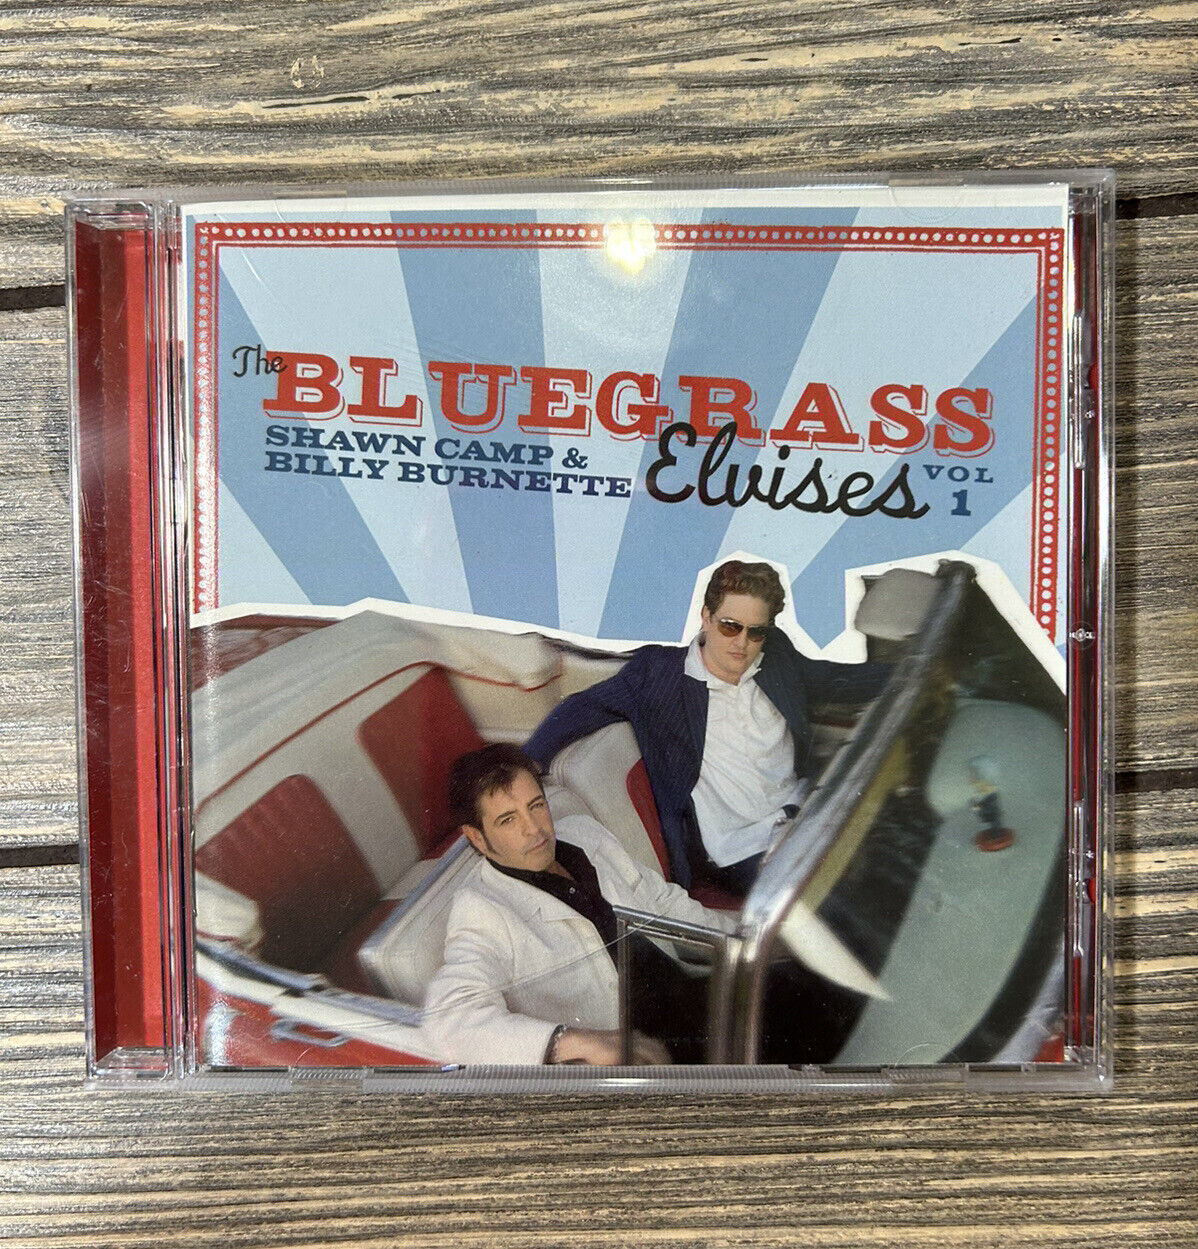 2007 The Bluegrass Elvises Vol 1 CD Shawn Camp Billy Burnette